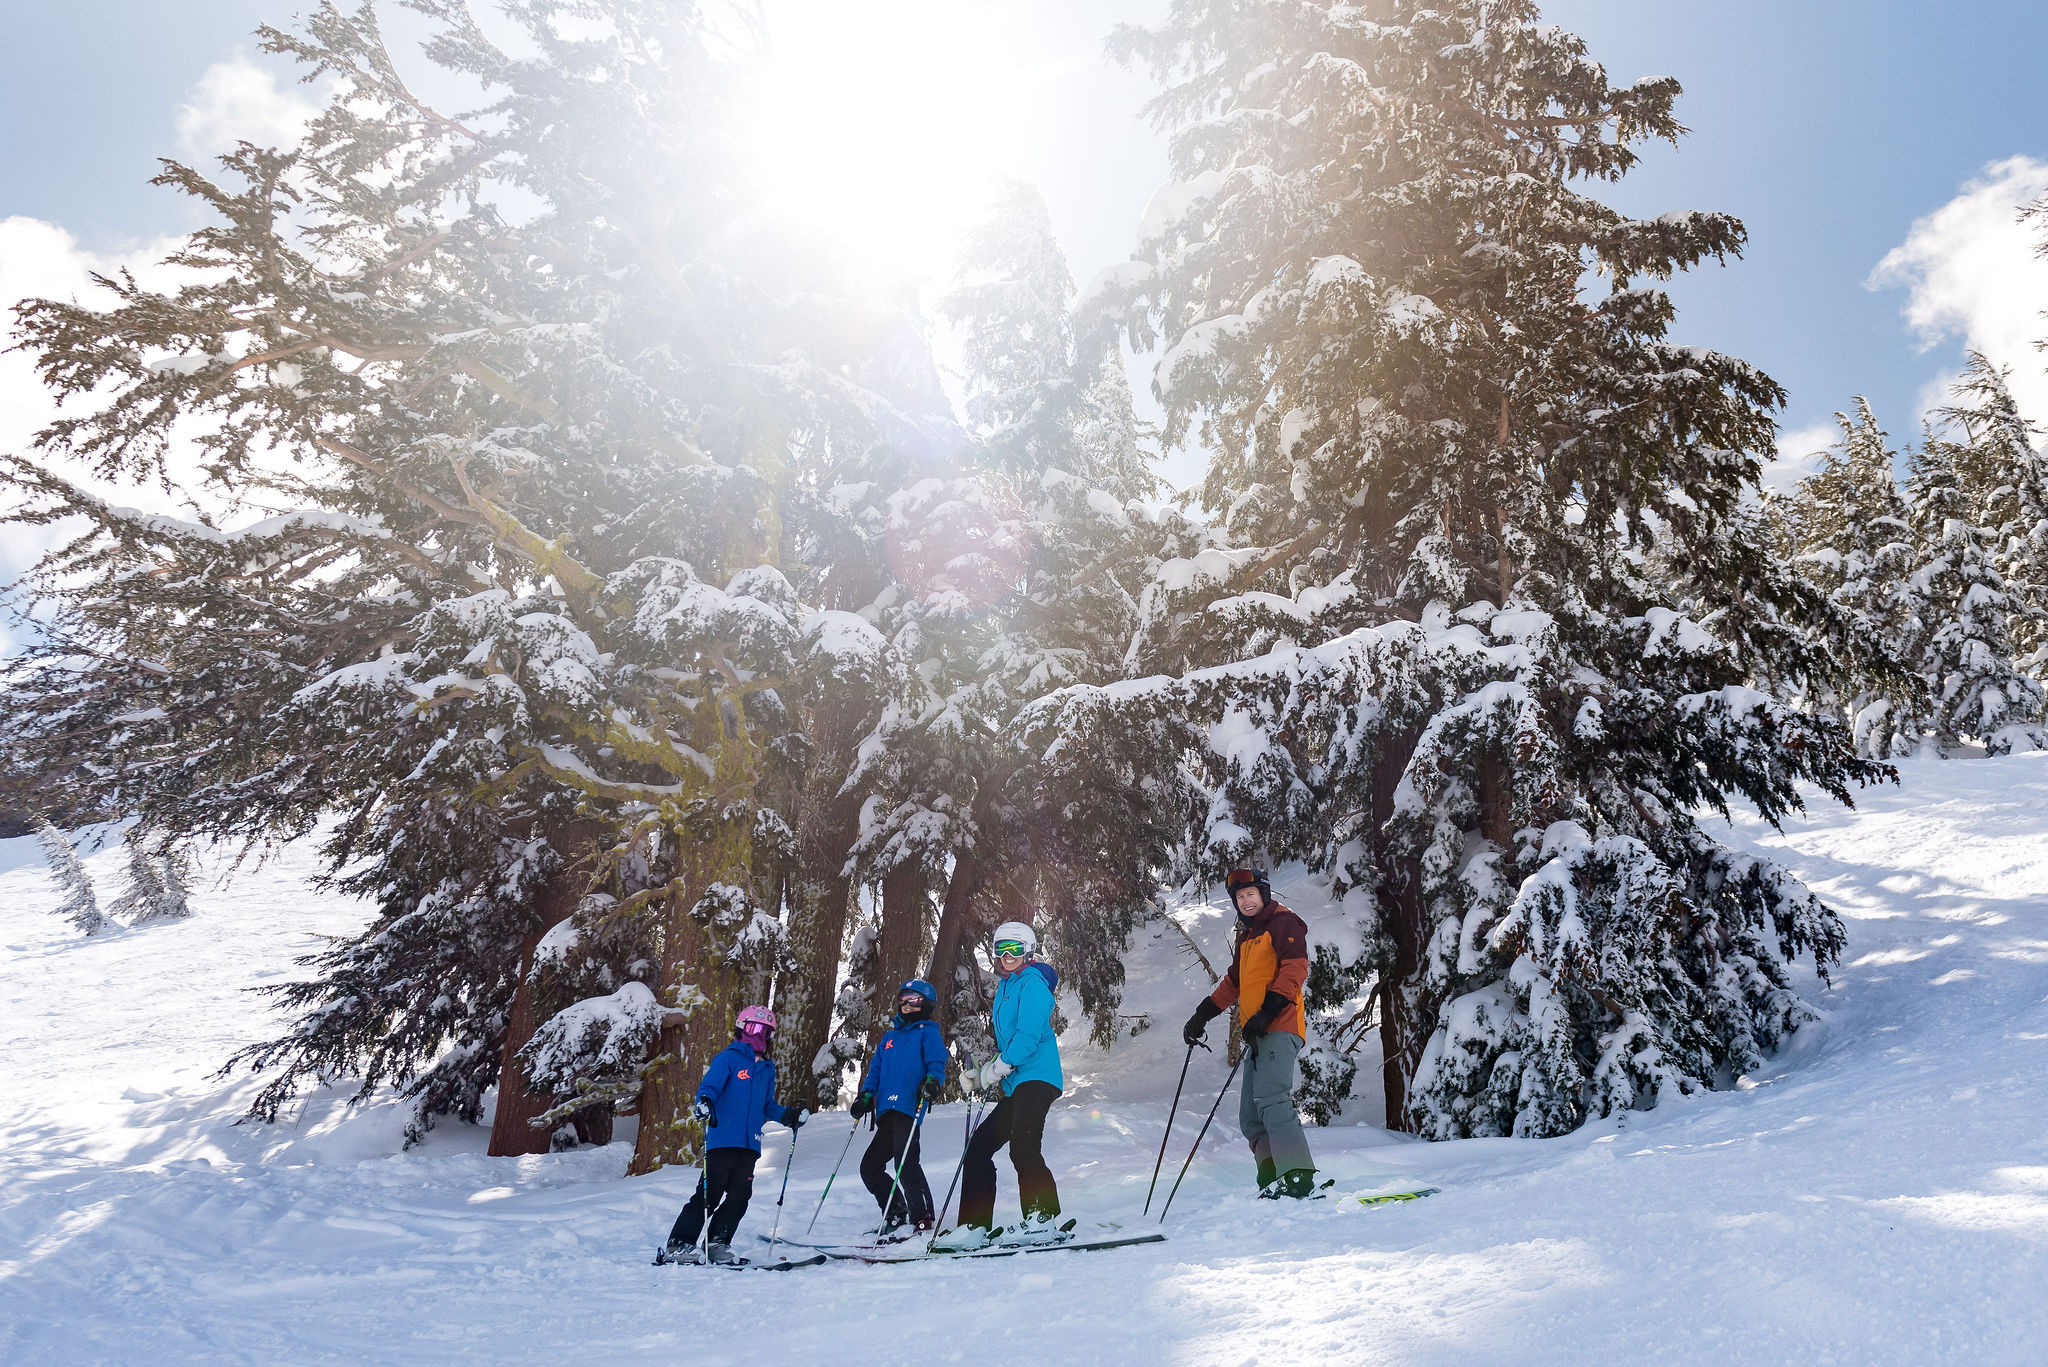 winter family portrait session at a ski resort